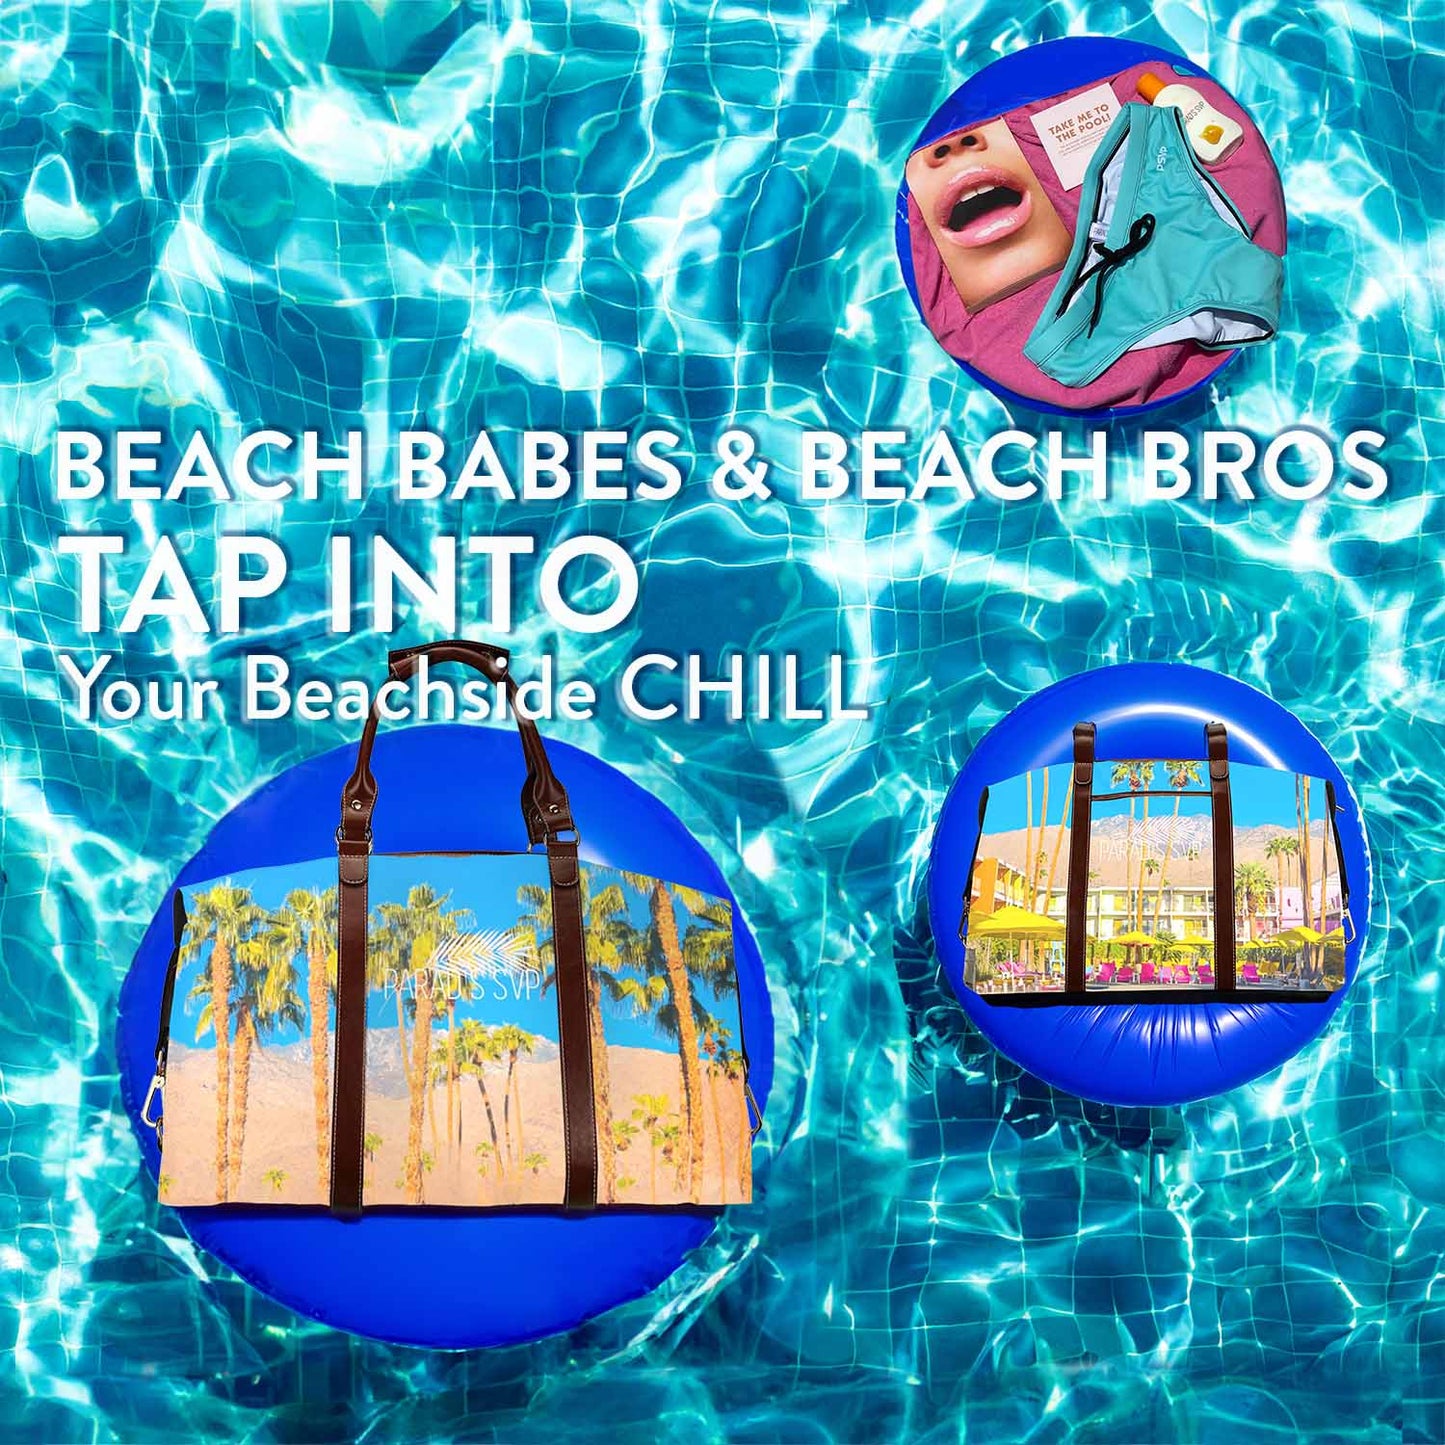 Beach bags and speedo swim briefs summer collection by PARADIS SVP - www.paradissvp.com